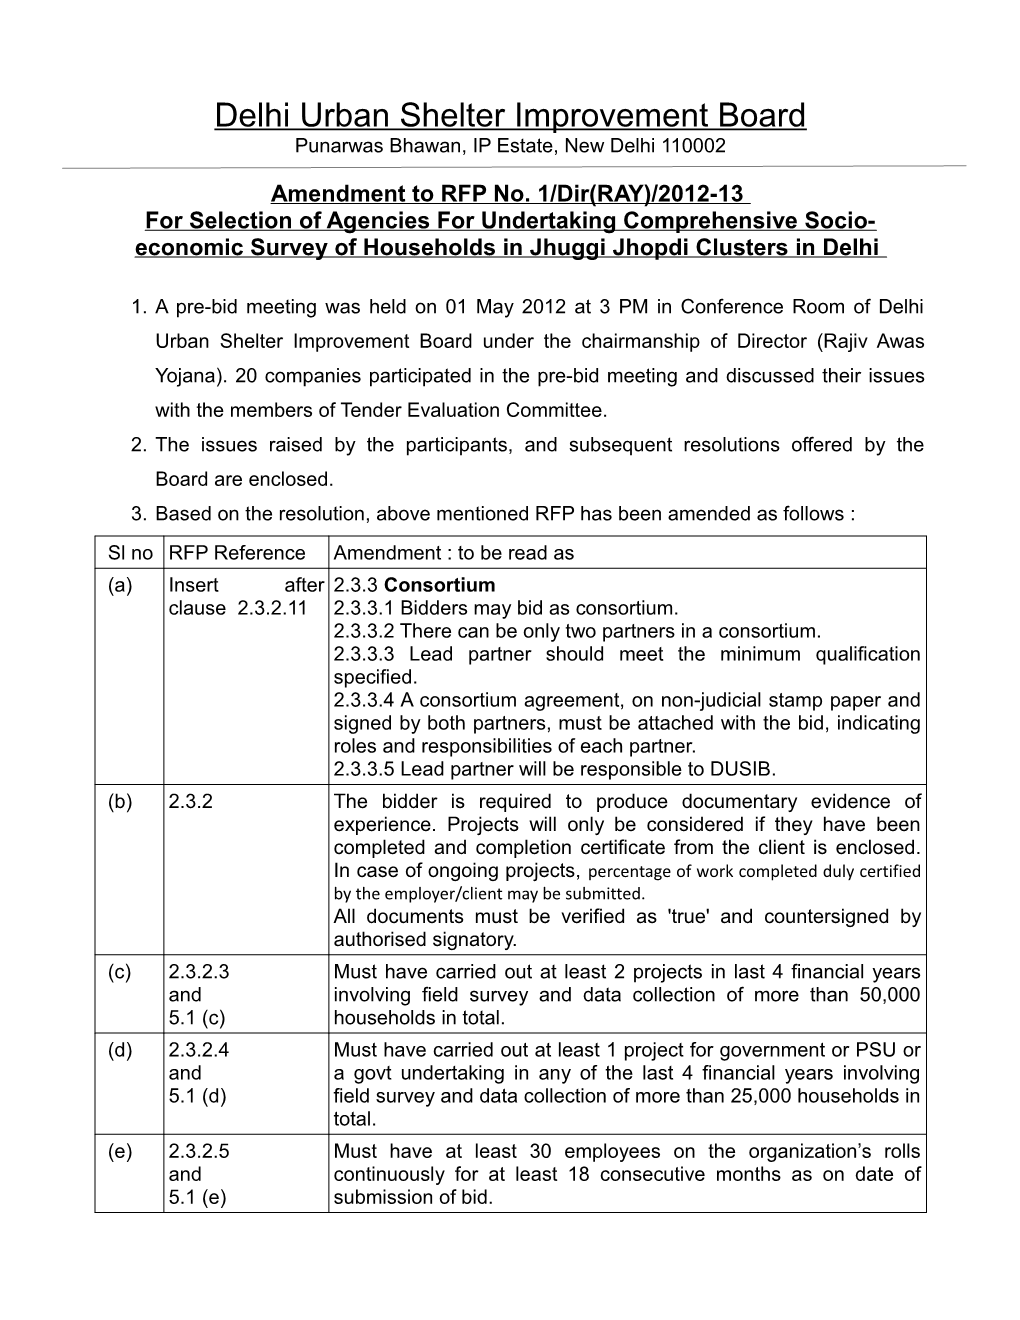 Amendment to RFP No. 1/Dir(RAY)/2012-13